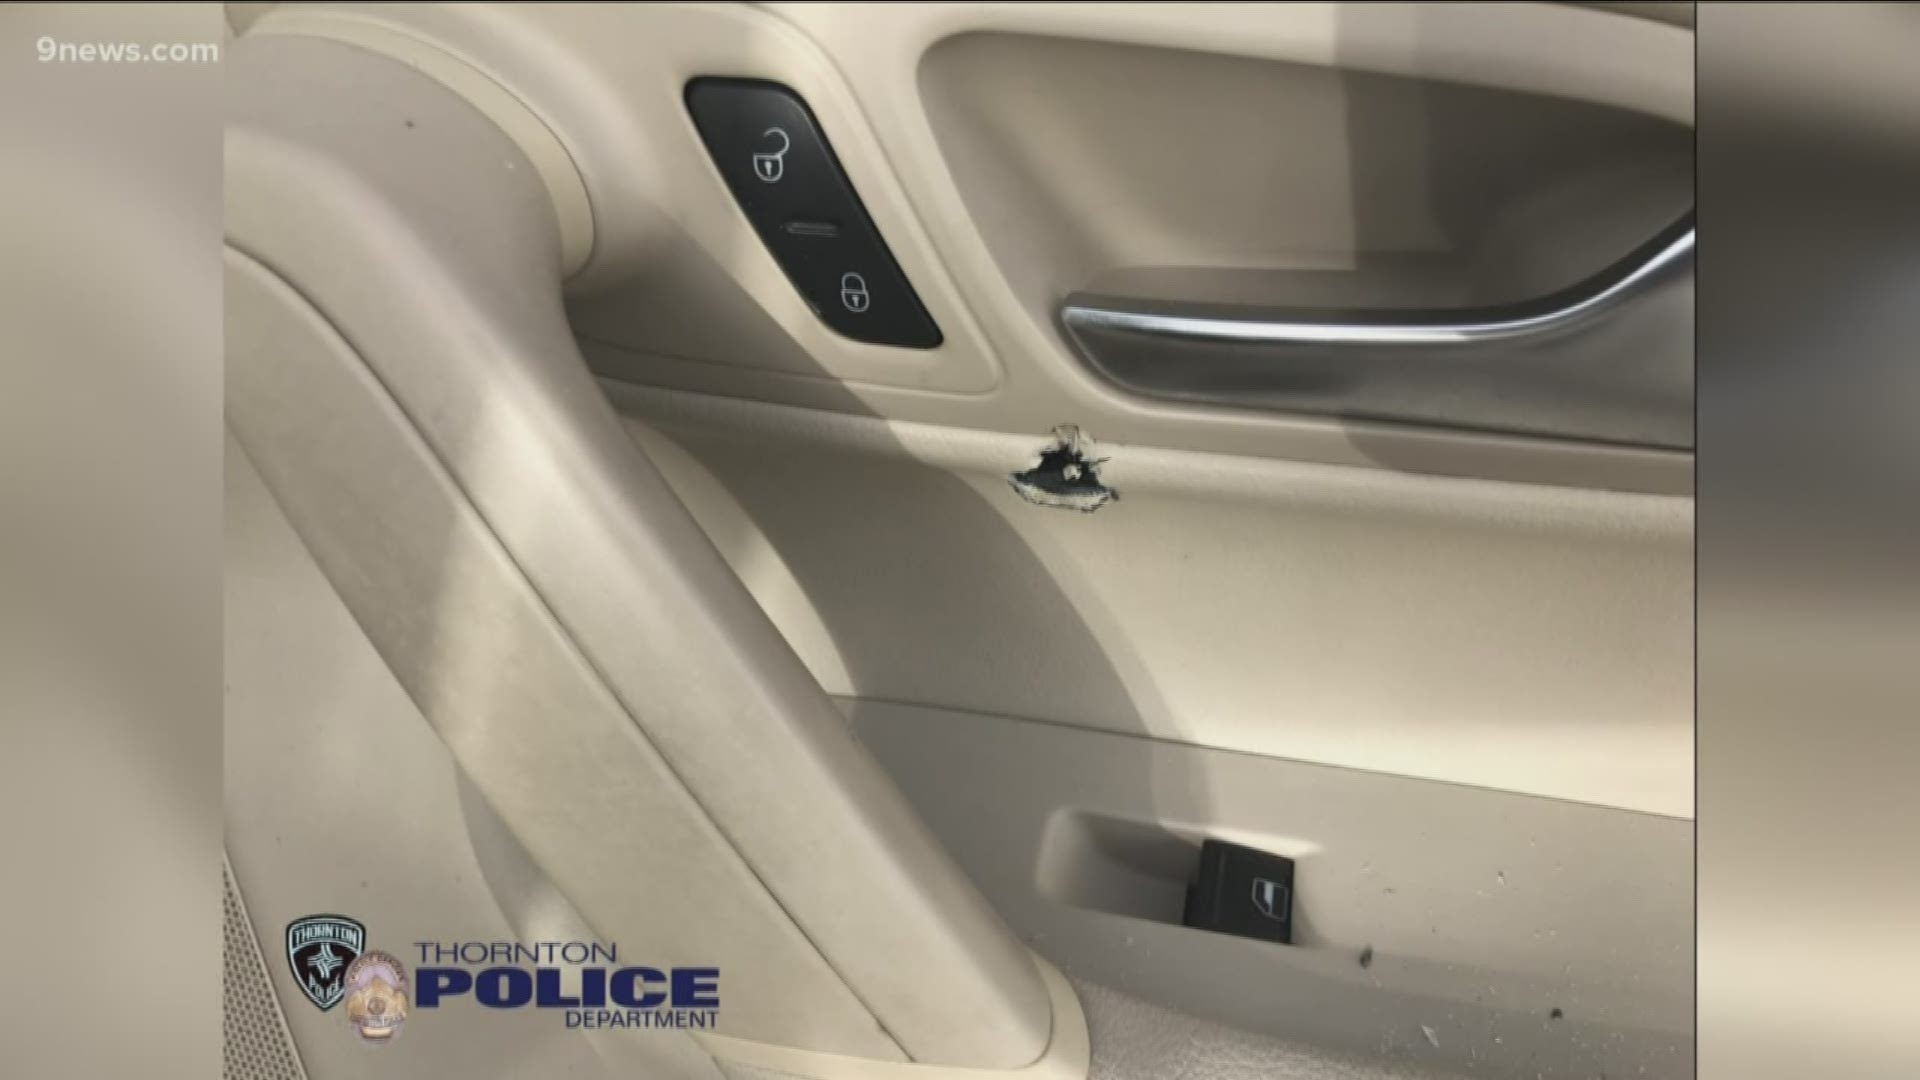 The Cadillac Escalade is described as a black SUV with Colorado plates 962-HQQ, police said.